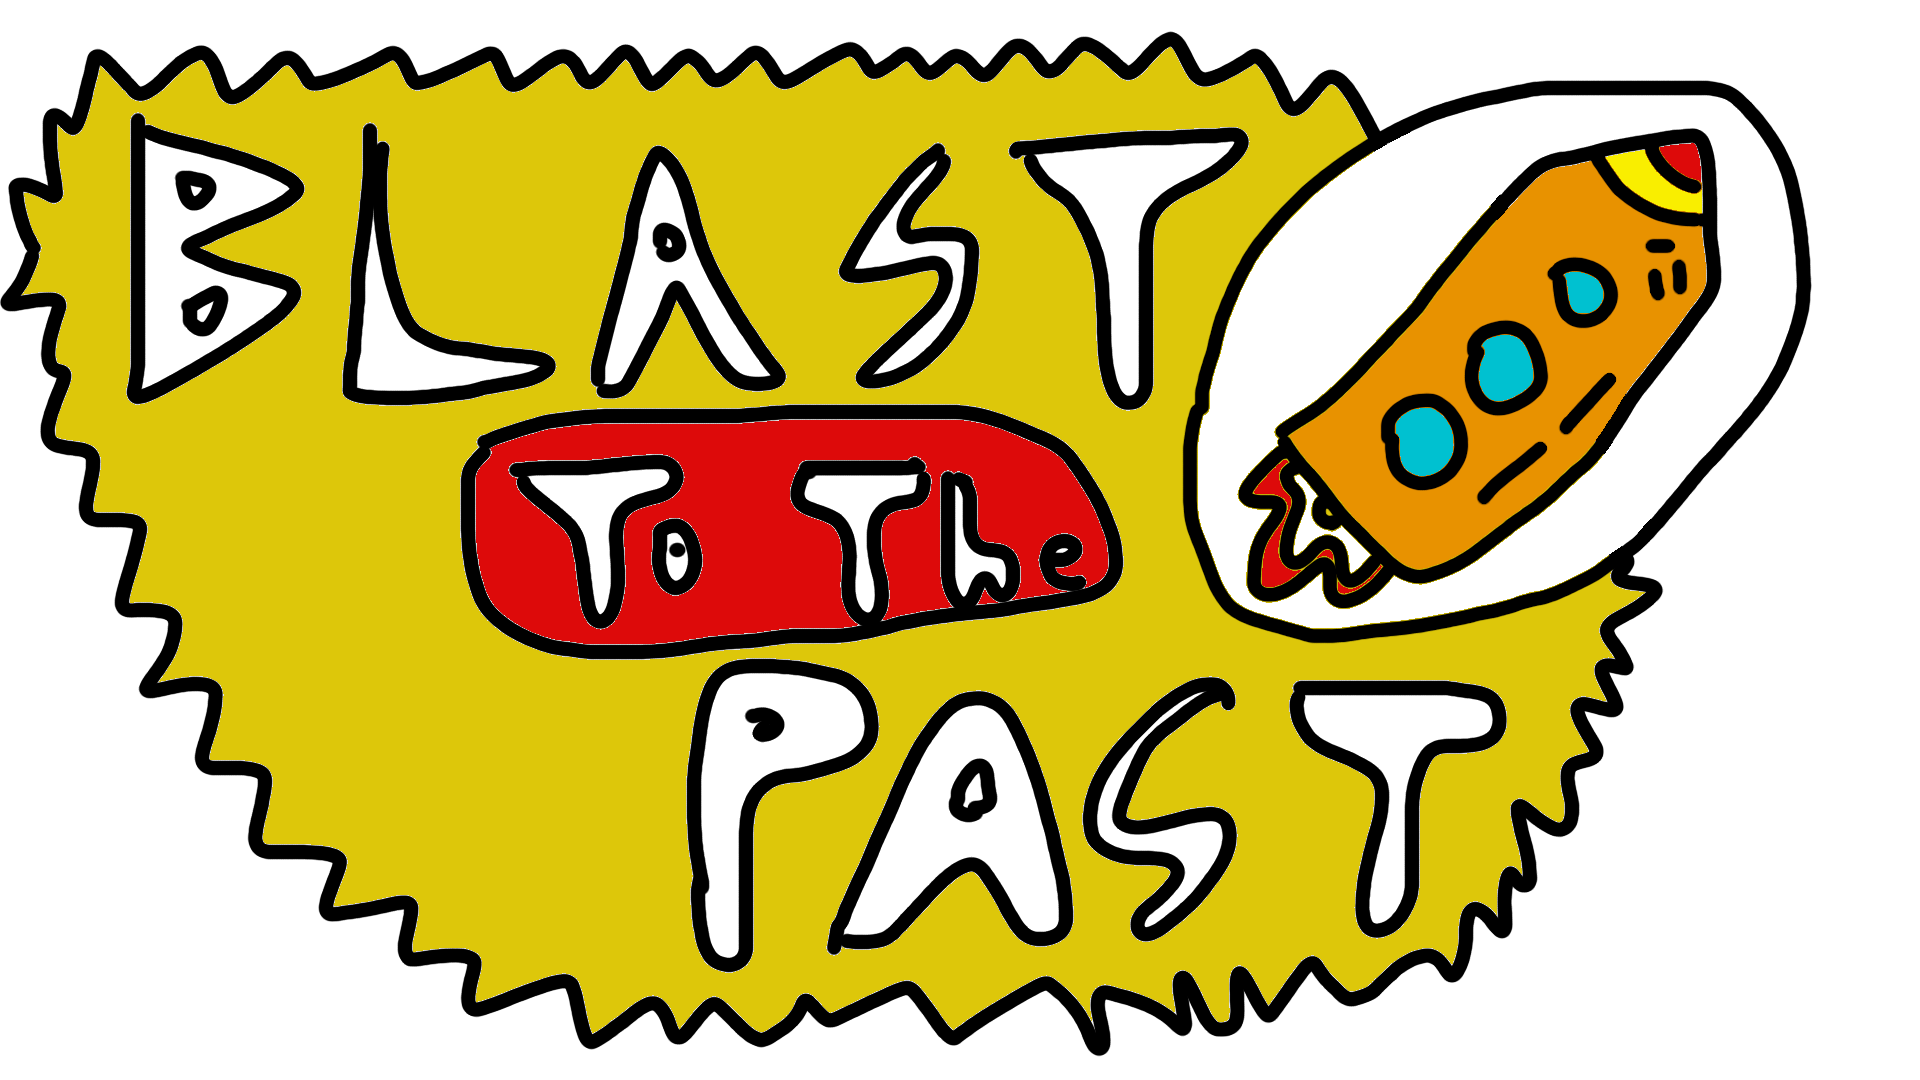 Blast To The Past